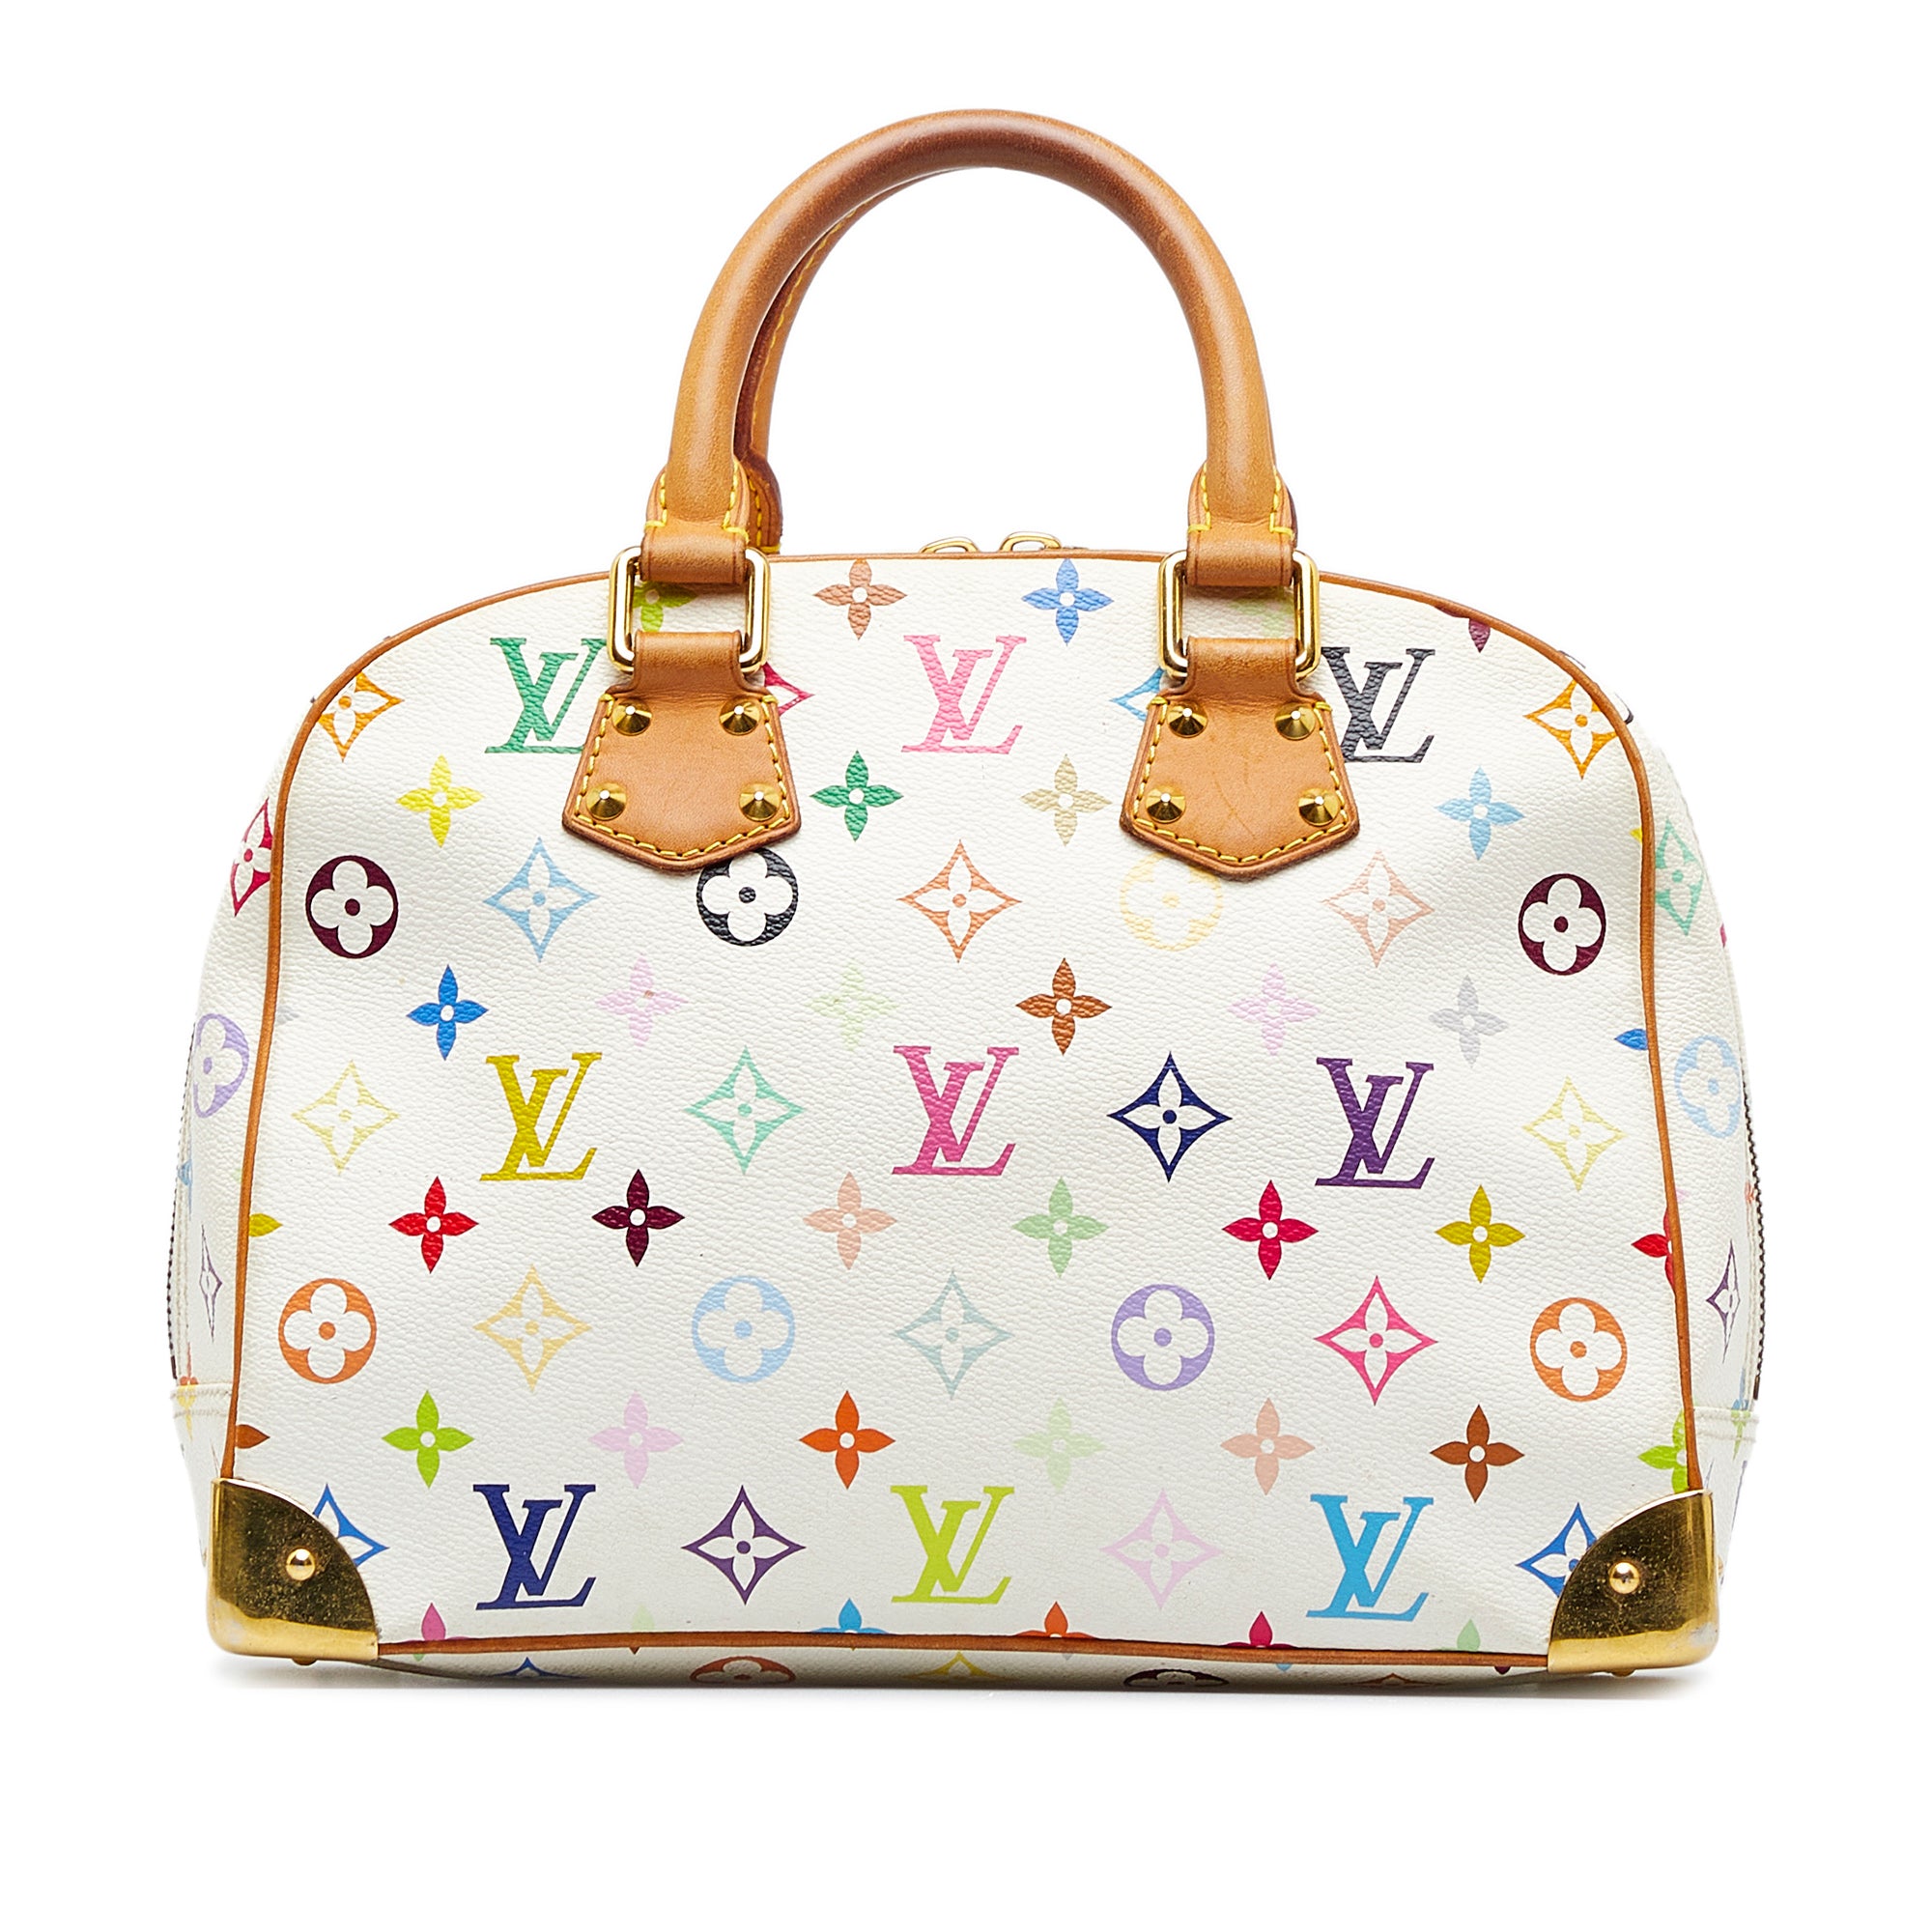 Louis Vuitton - Authenticated Trouville Handbag - Leather Multicolour for Women, Very Good Condition